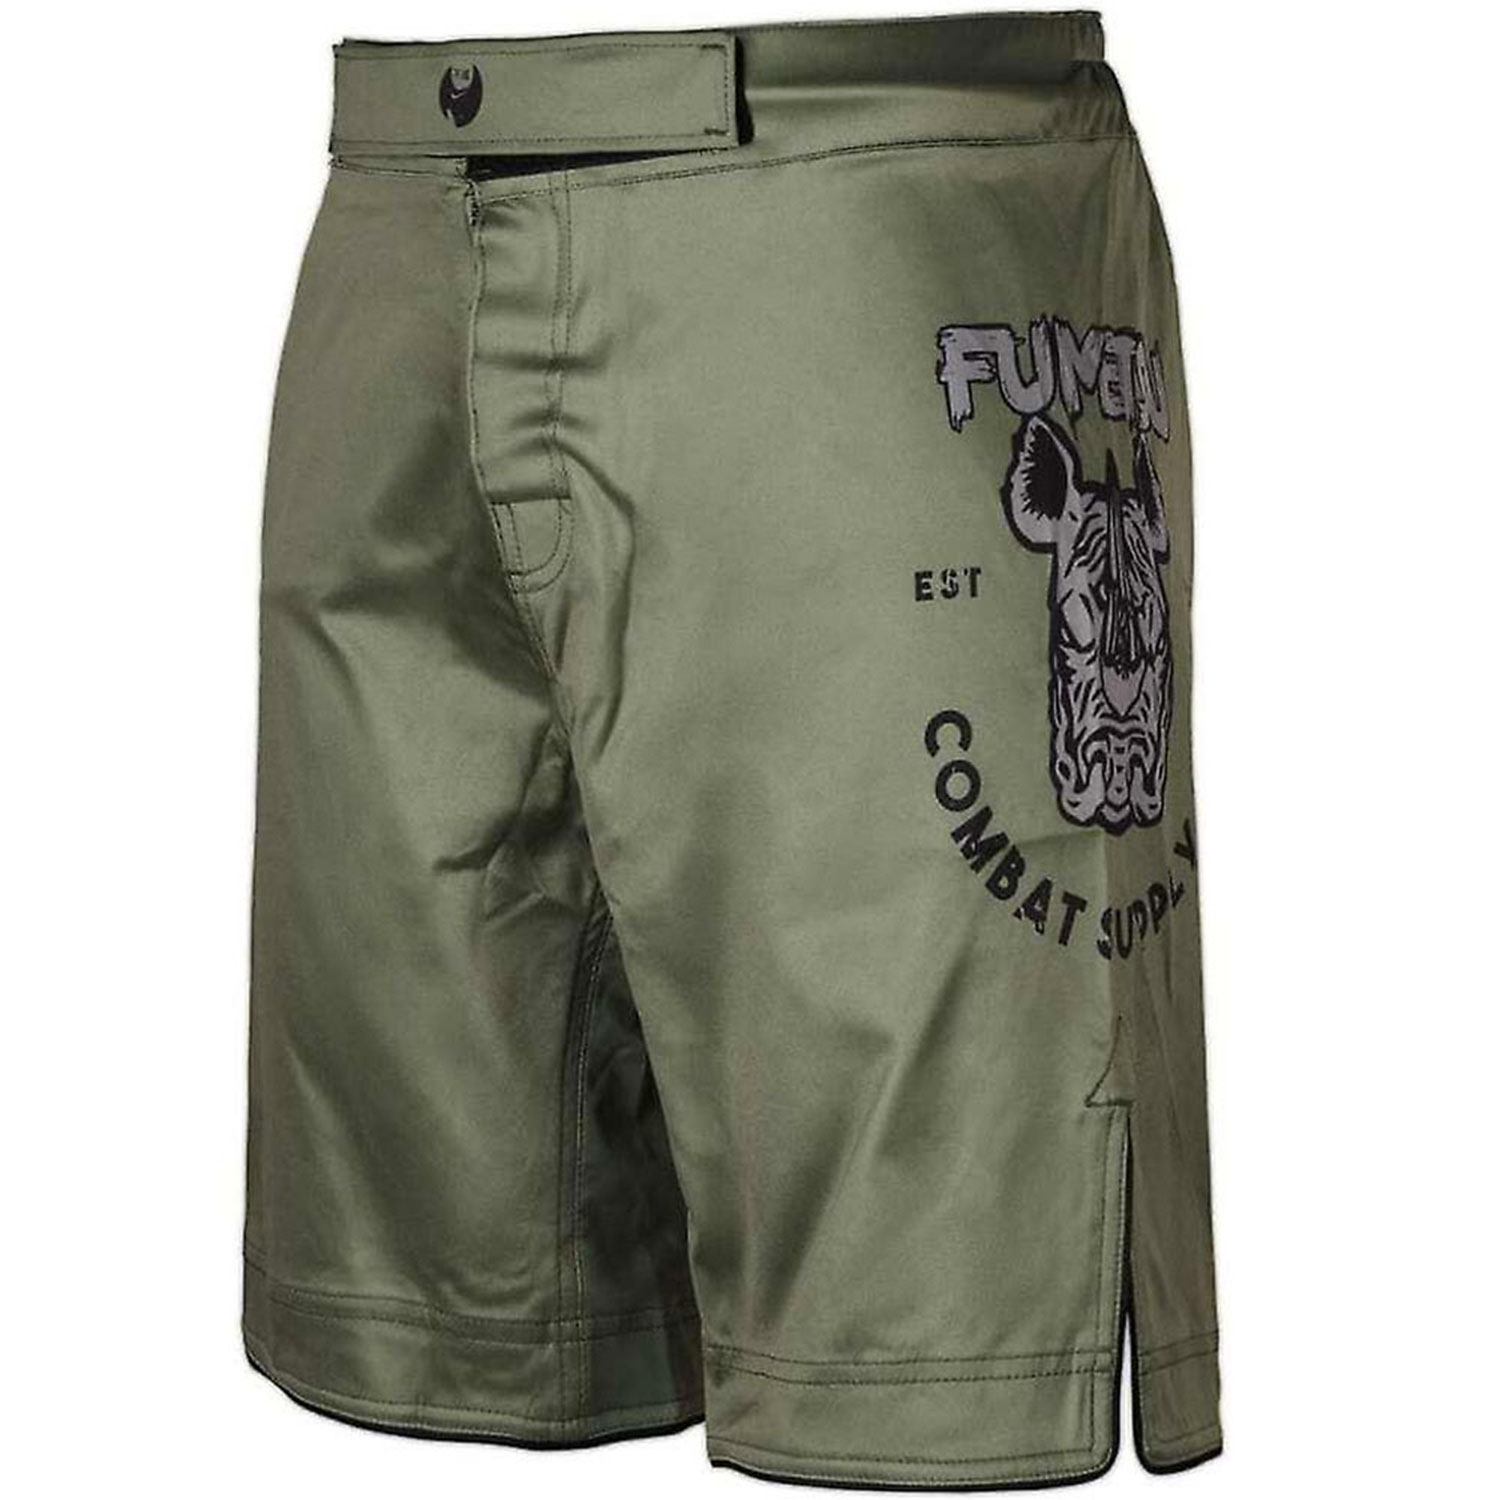 Fumetsu MMA Fight Shorts, Rampage Supply, khaki